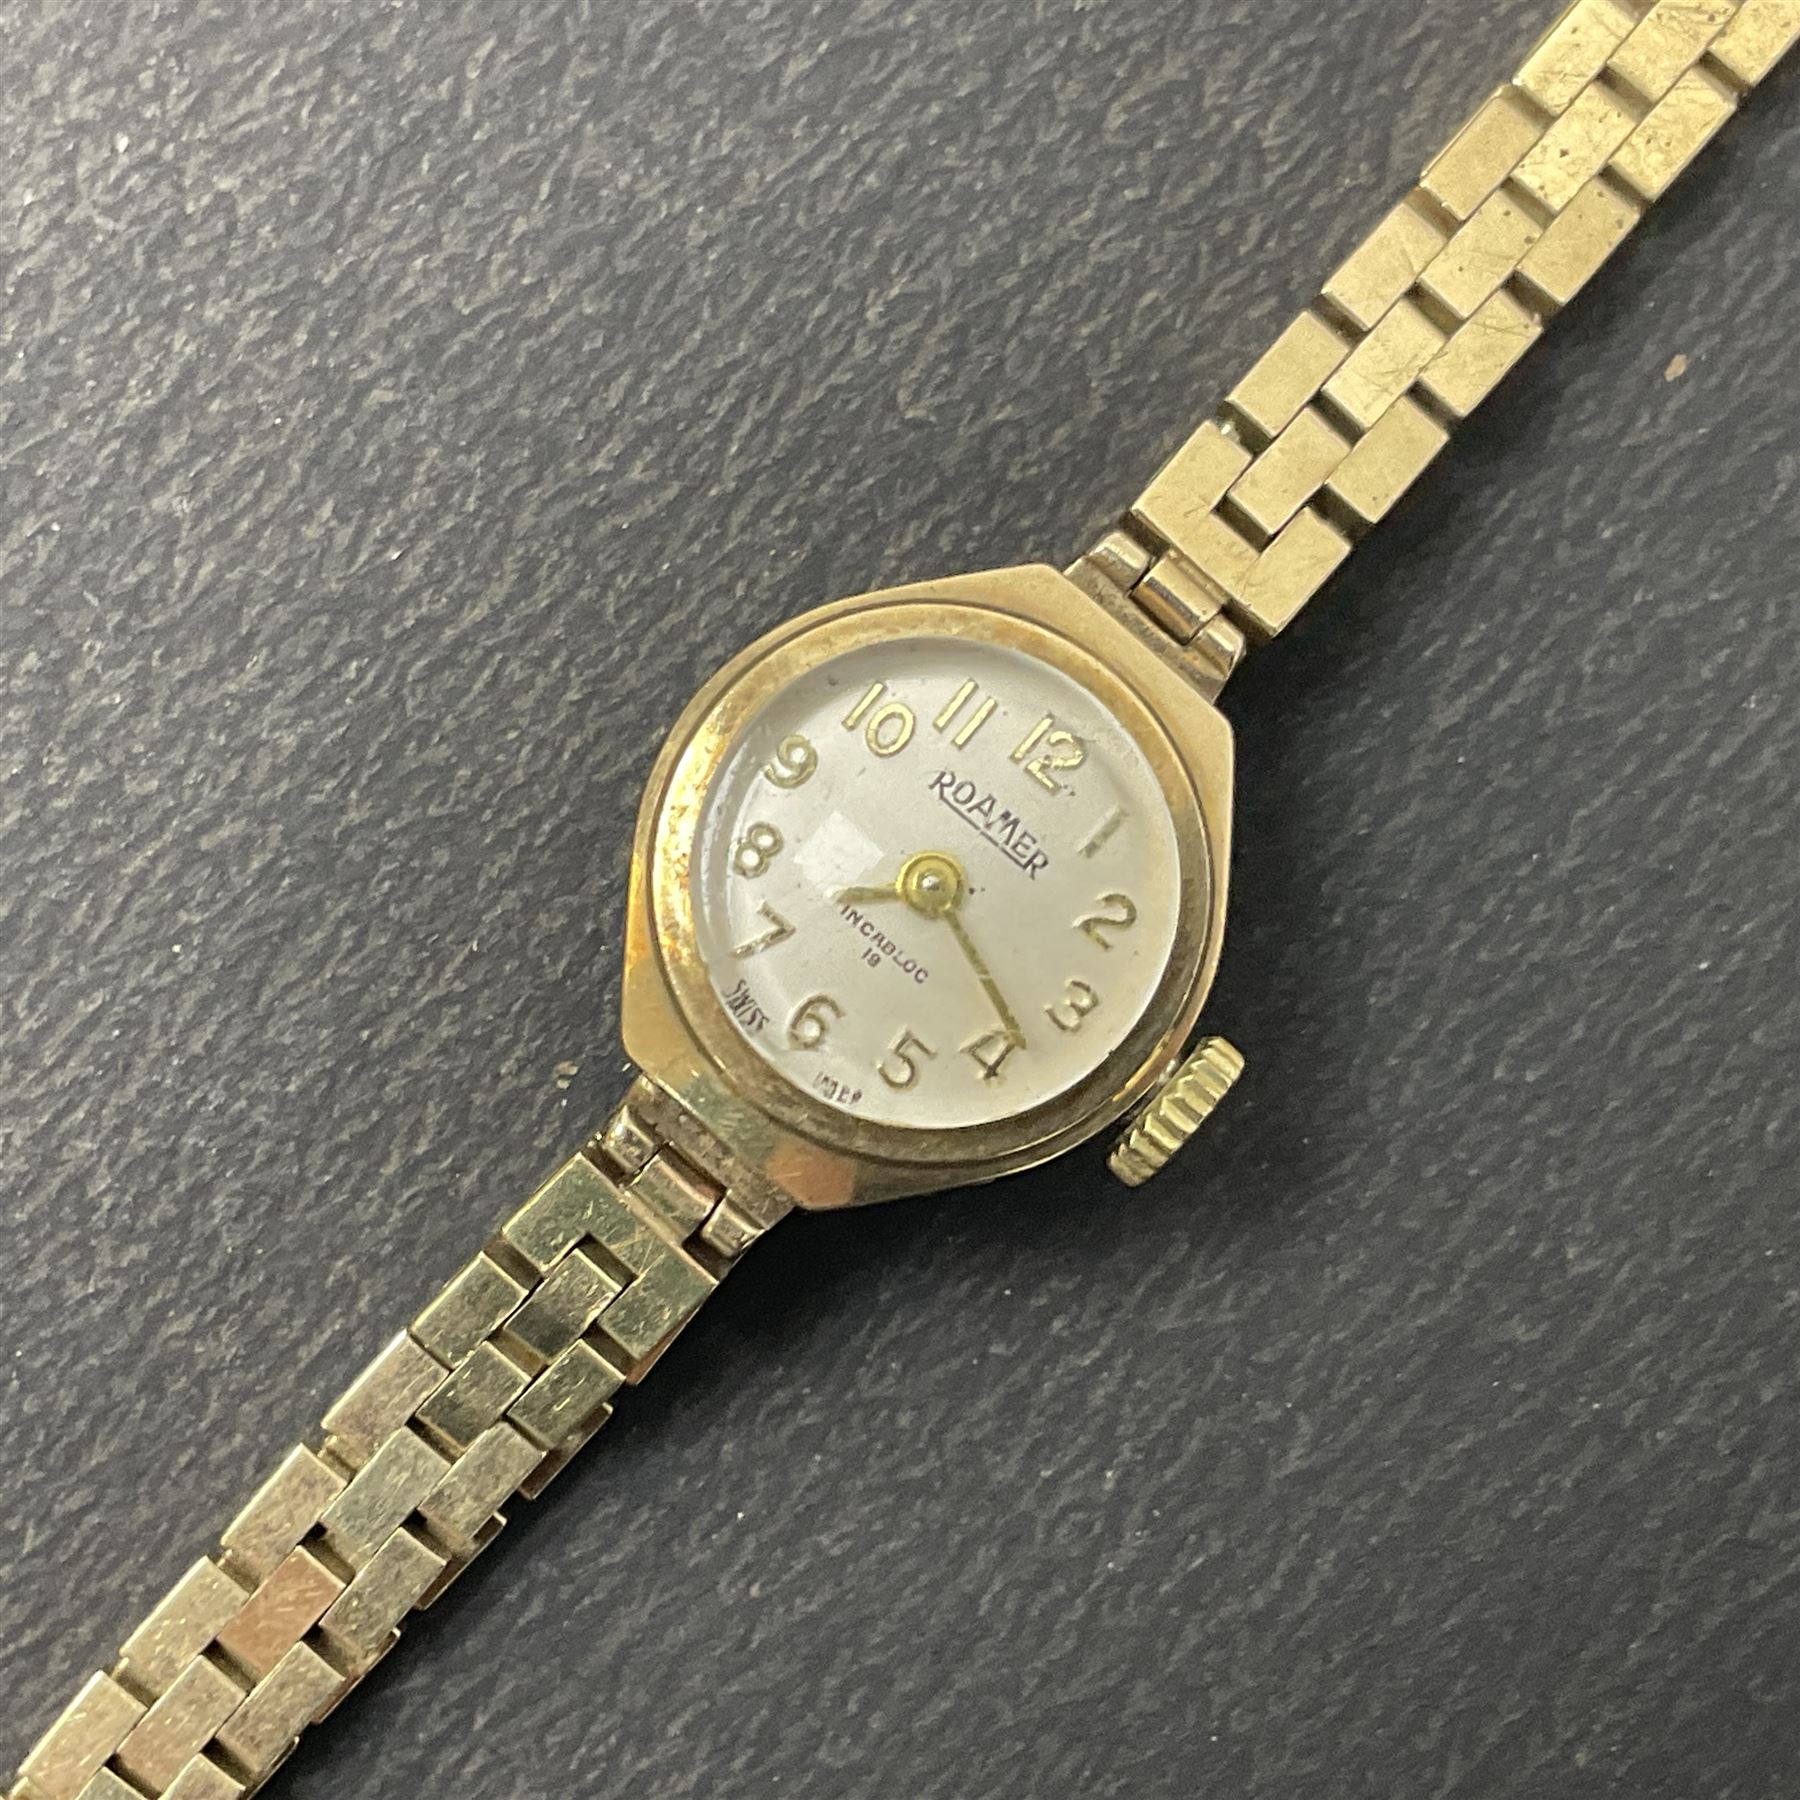 Roamer ladies 9ct gold manual wind wristwatch - Image 2 of 6